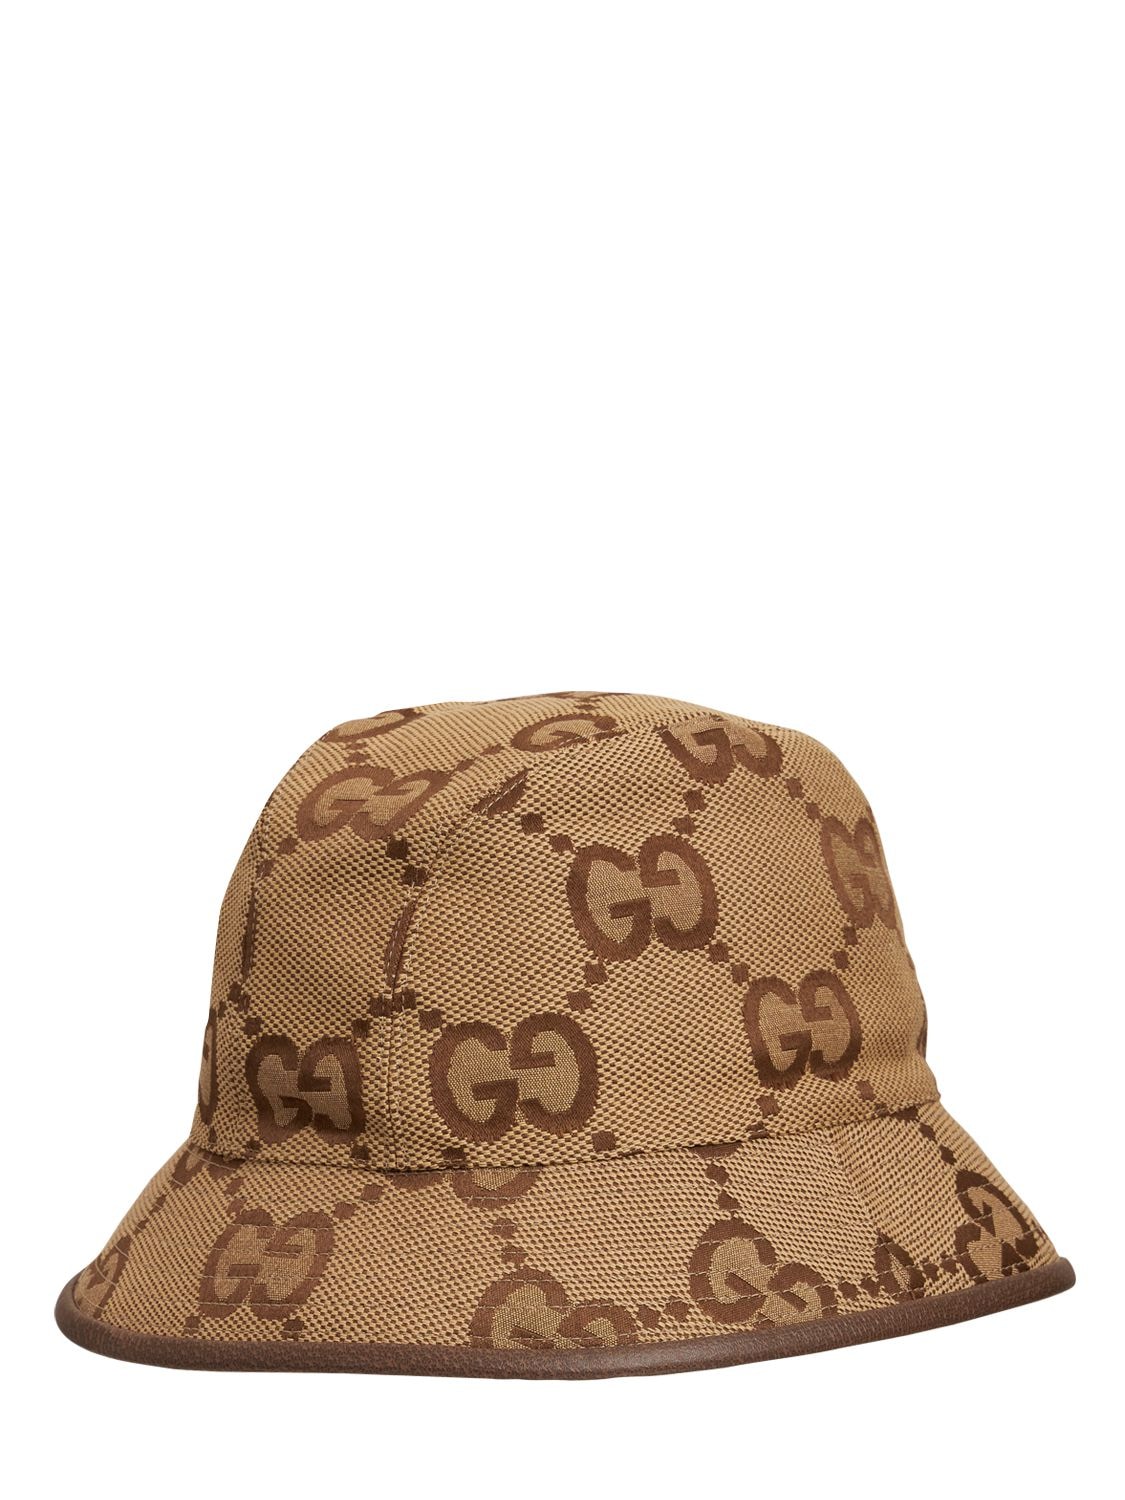 GG Supreme Canvas Bucket Hat in Brown - Gucci